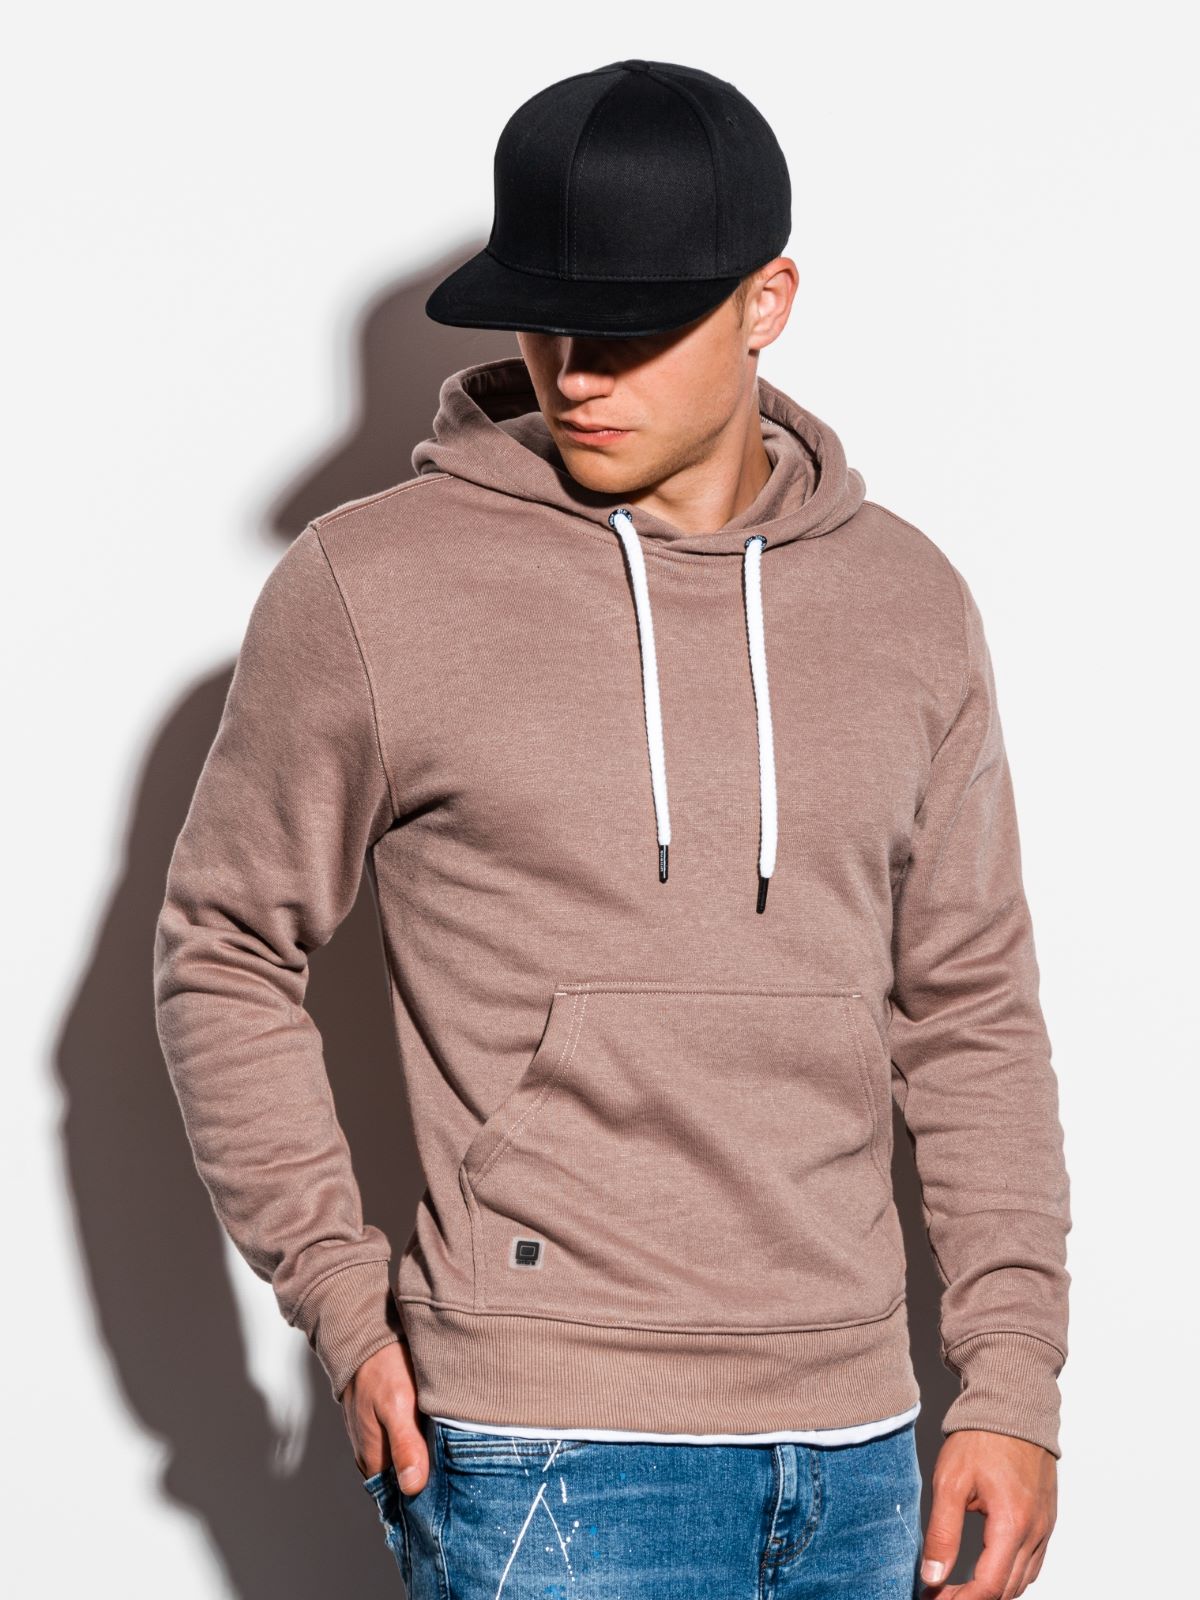 Men's hooded sweatshirt B979 - brown | MODONE wholesale - Clothing For Men